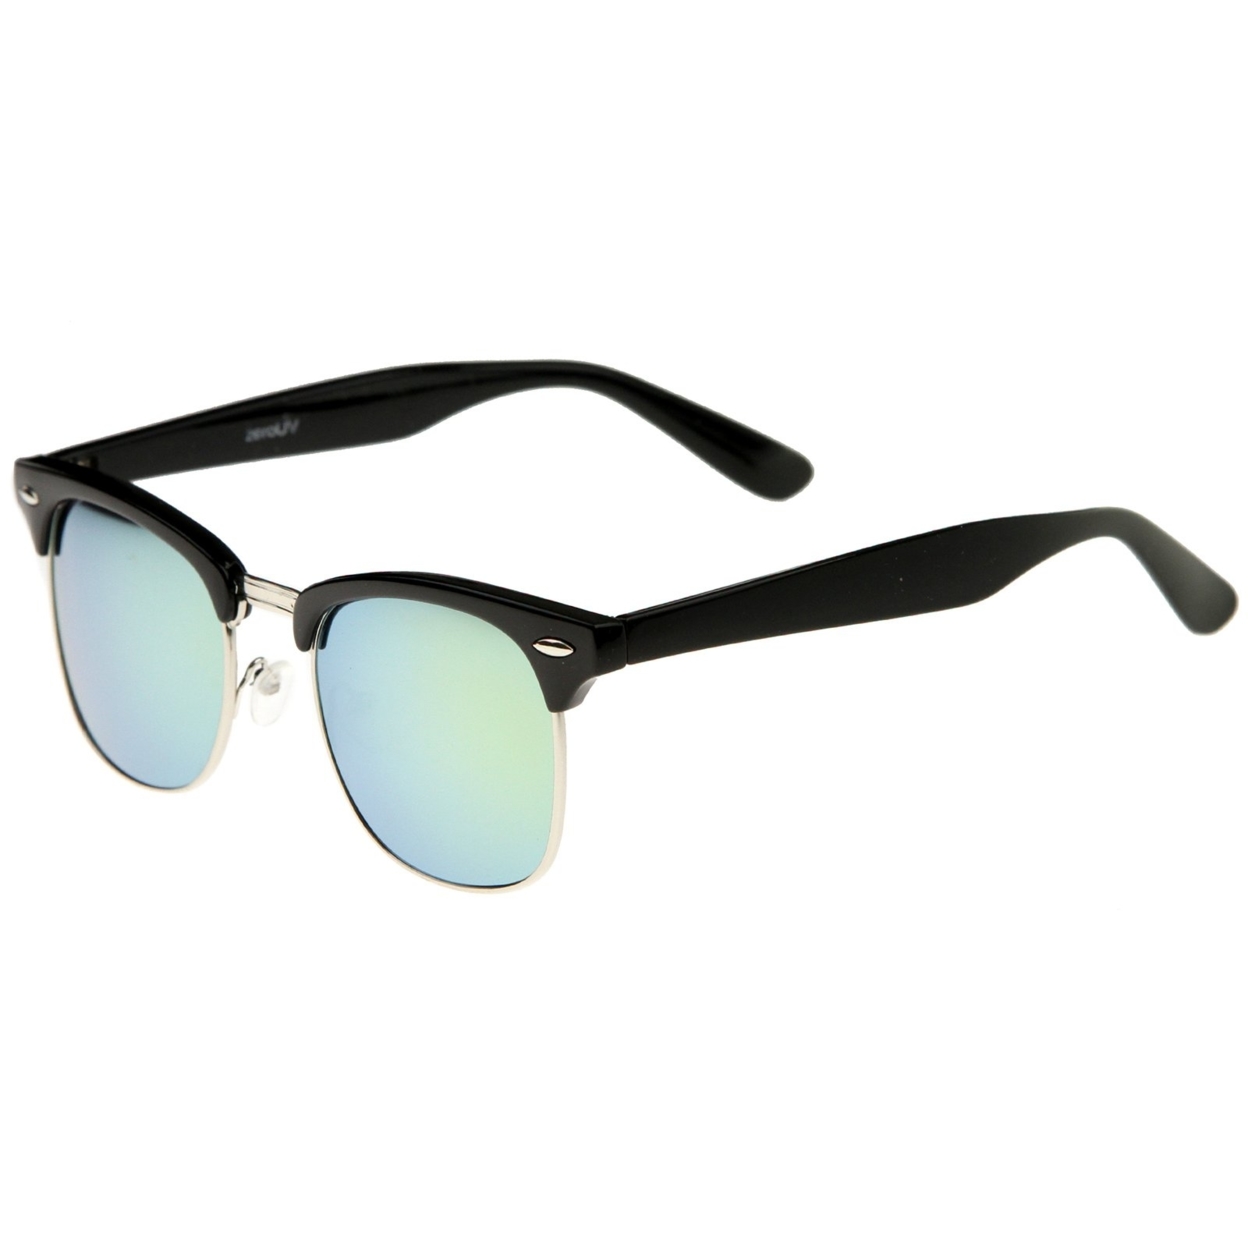 Premium Half Frame Colored Mirror Lens Horn Rimmed Sunglasses 50mm - Tortoise-Gold / Yellow Mirror